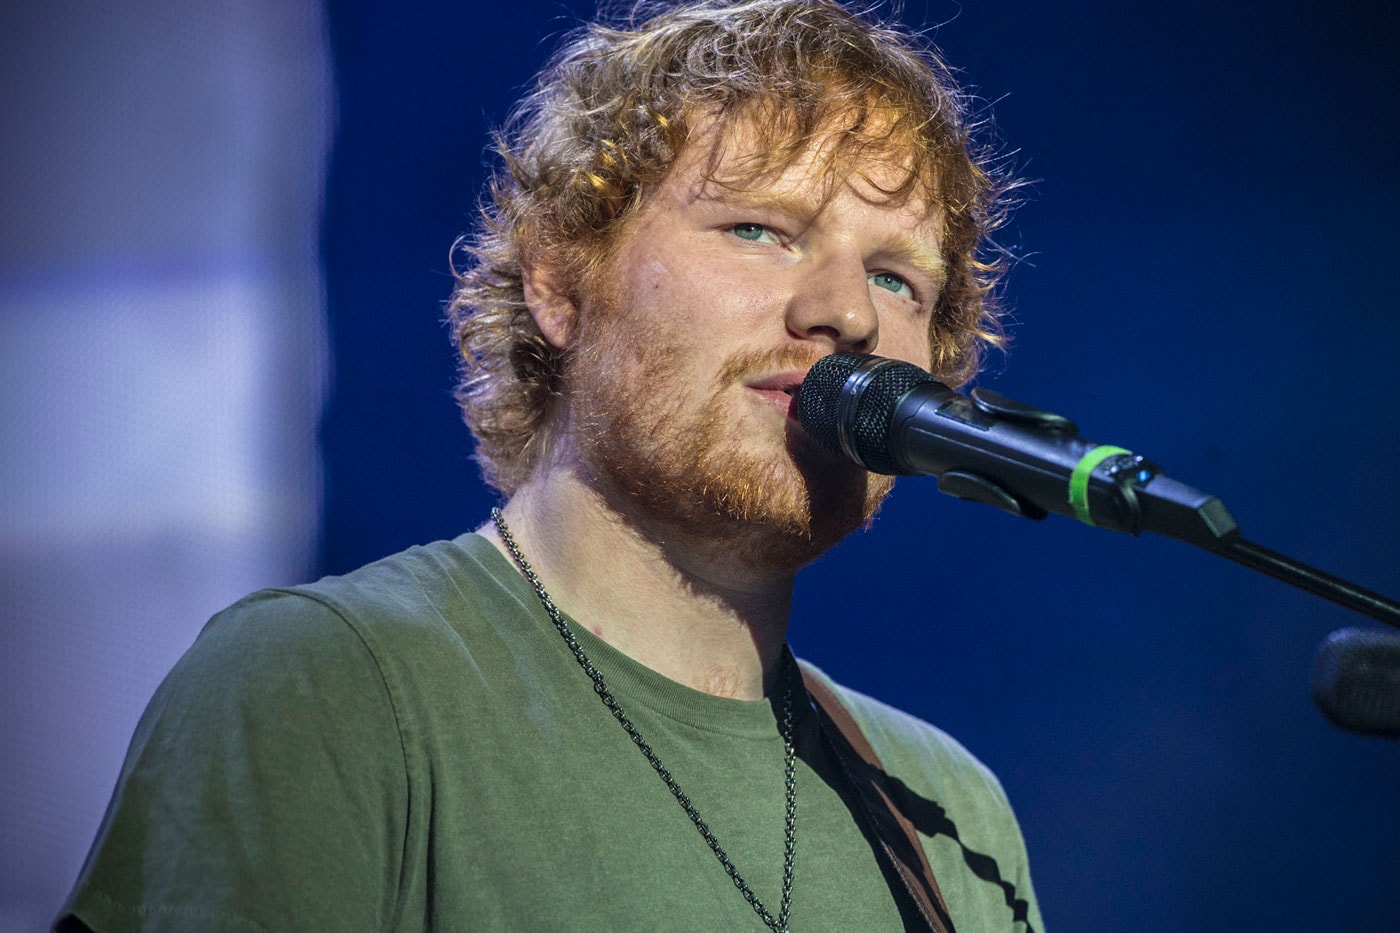 Ed Sheeran Covers Tory Lanez' "Say It"